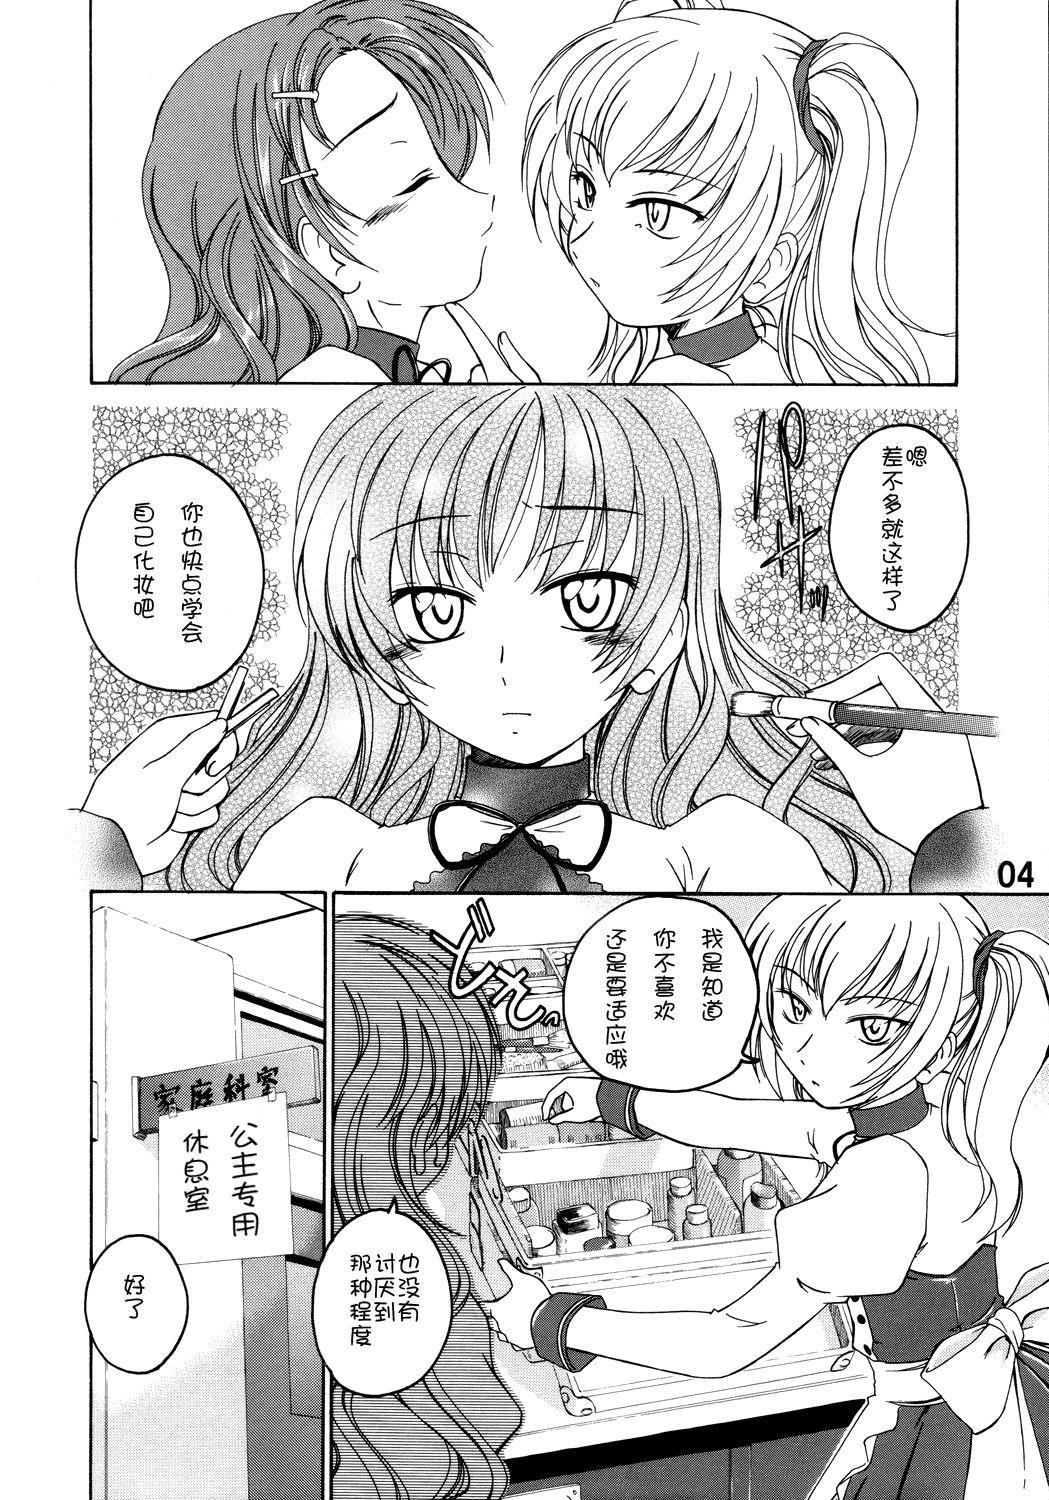 Cojiendo Manga Sangyou Haikibutsu 11 - Comic Industrial Wastes 11 - Princess princess Double Blowjob - Page 3